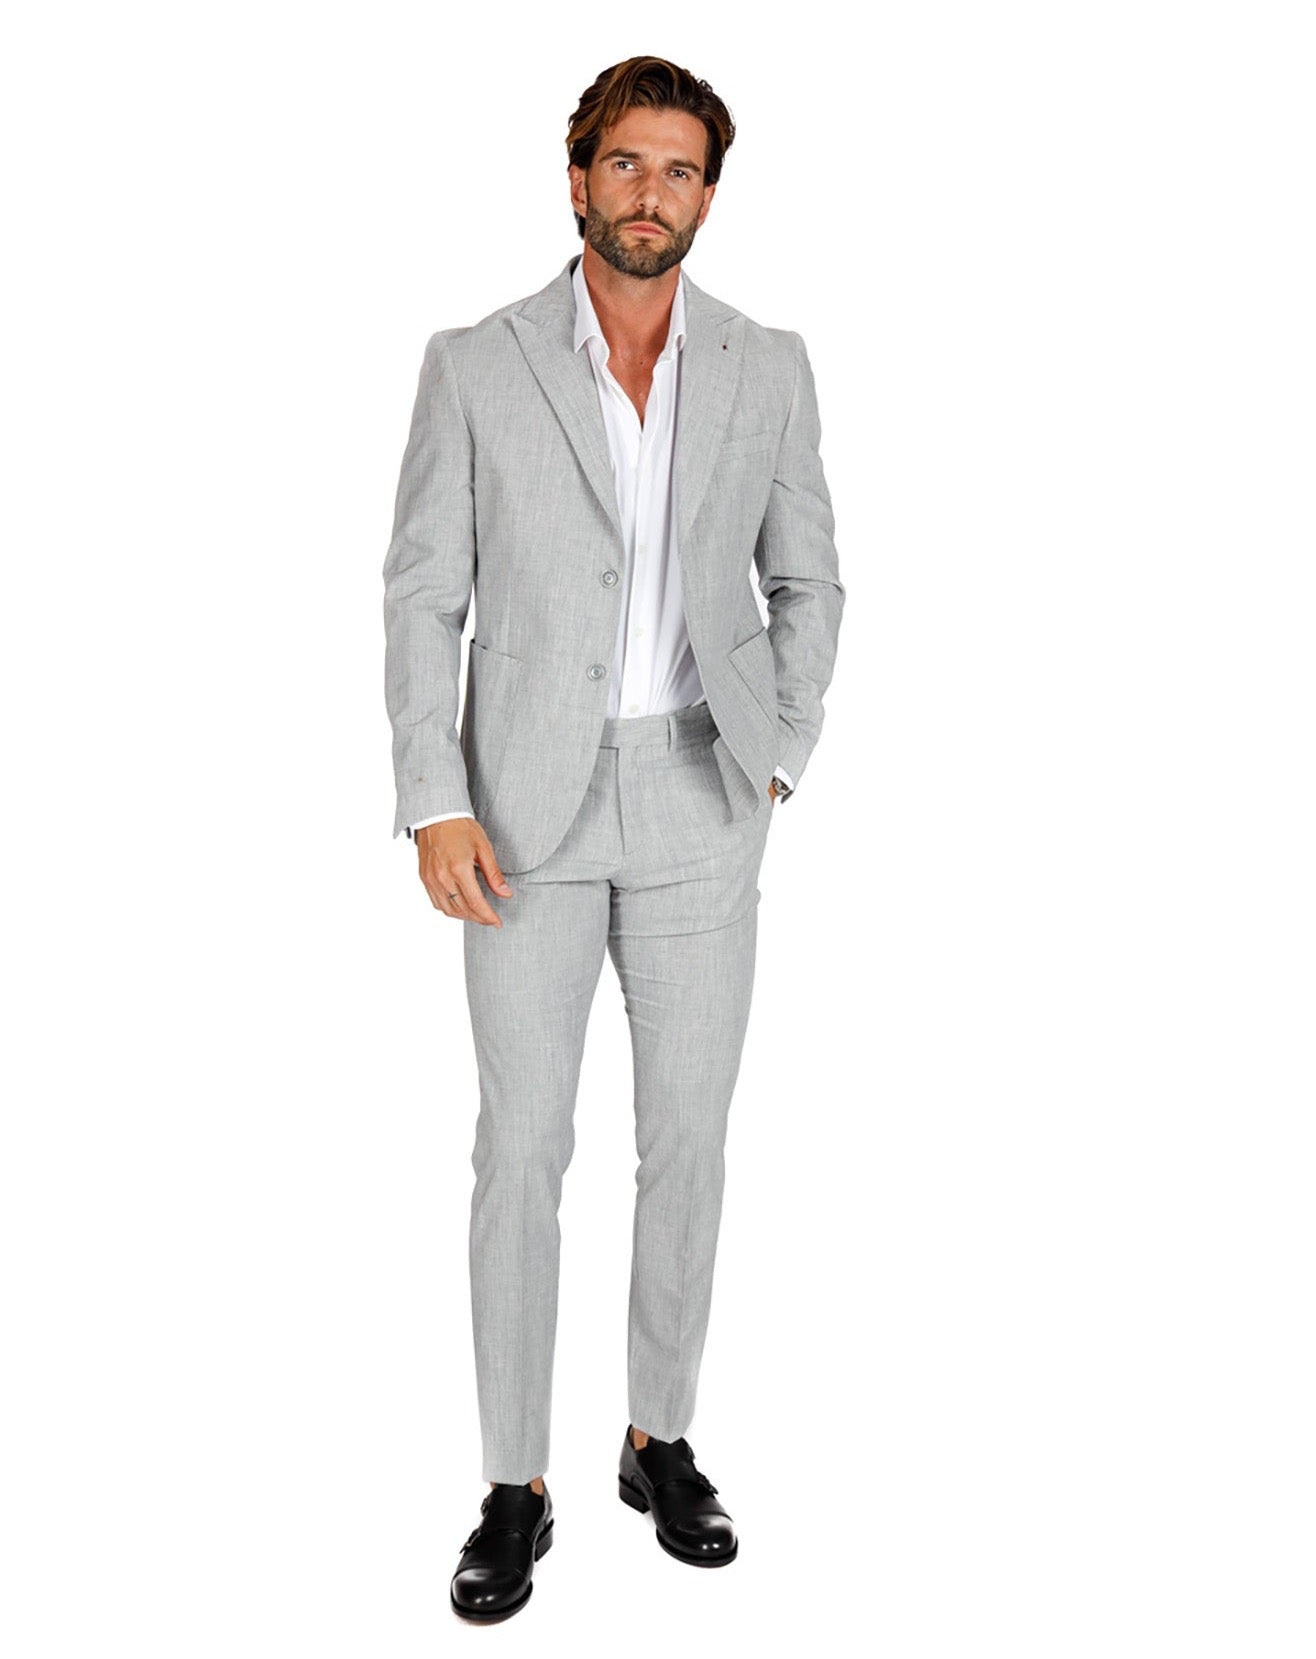 Lipari - gray single-breasted suit